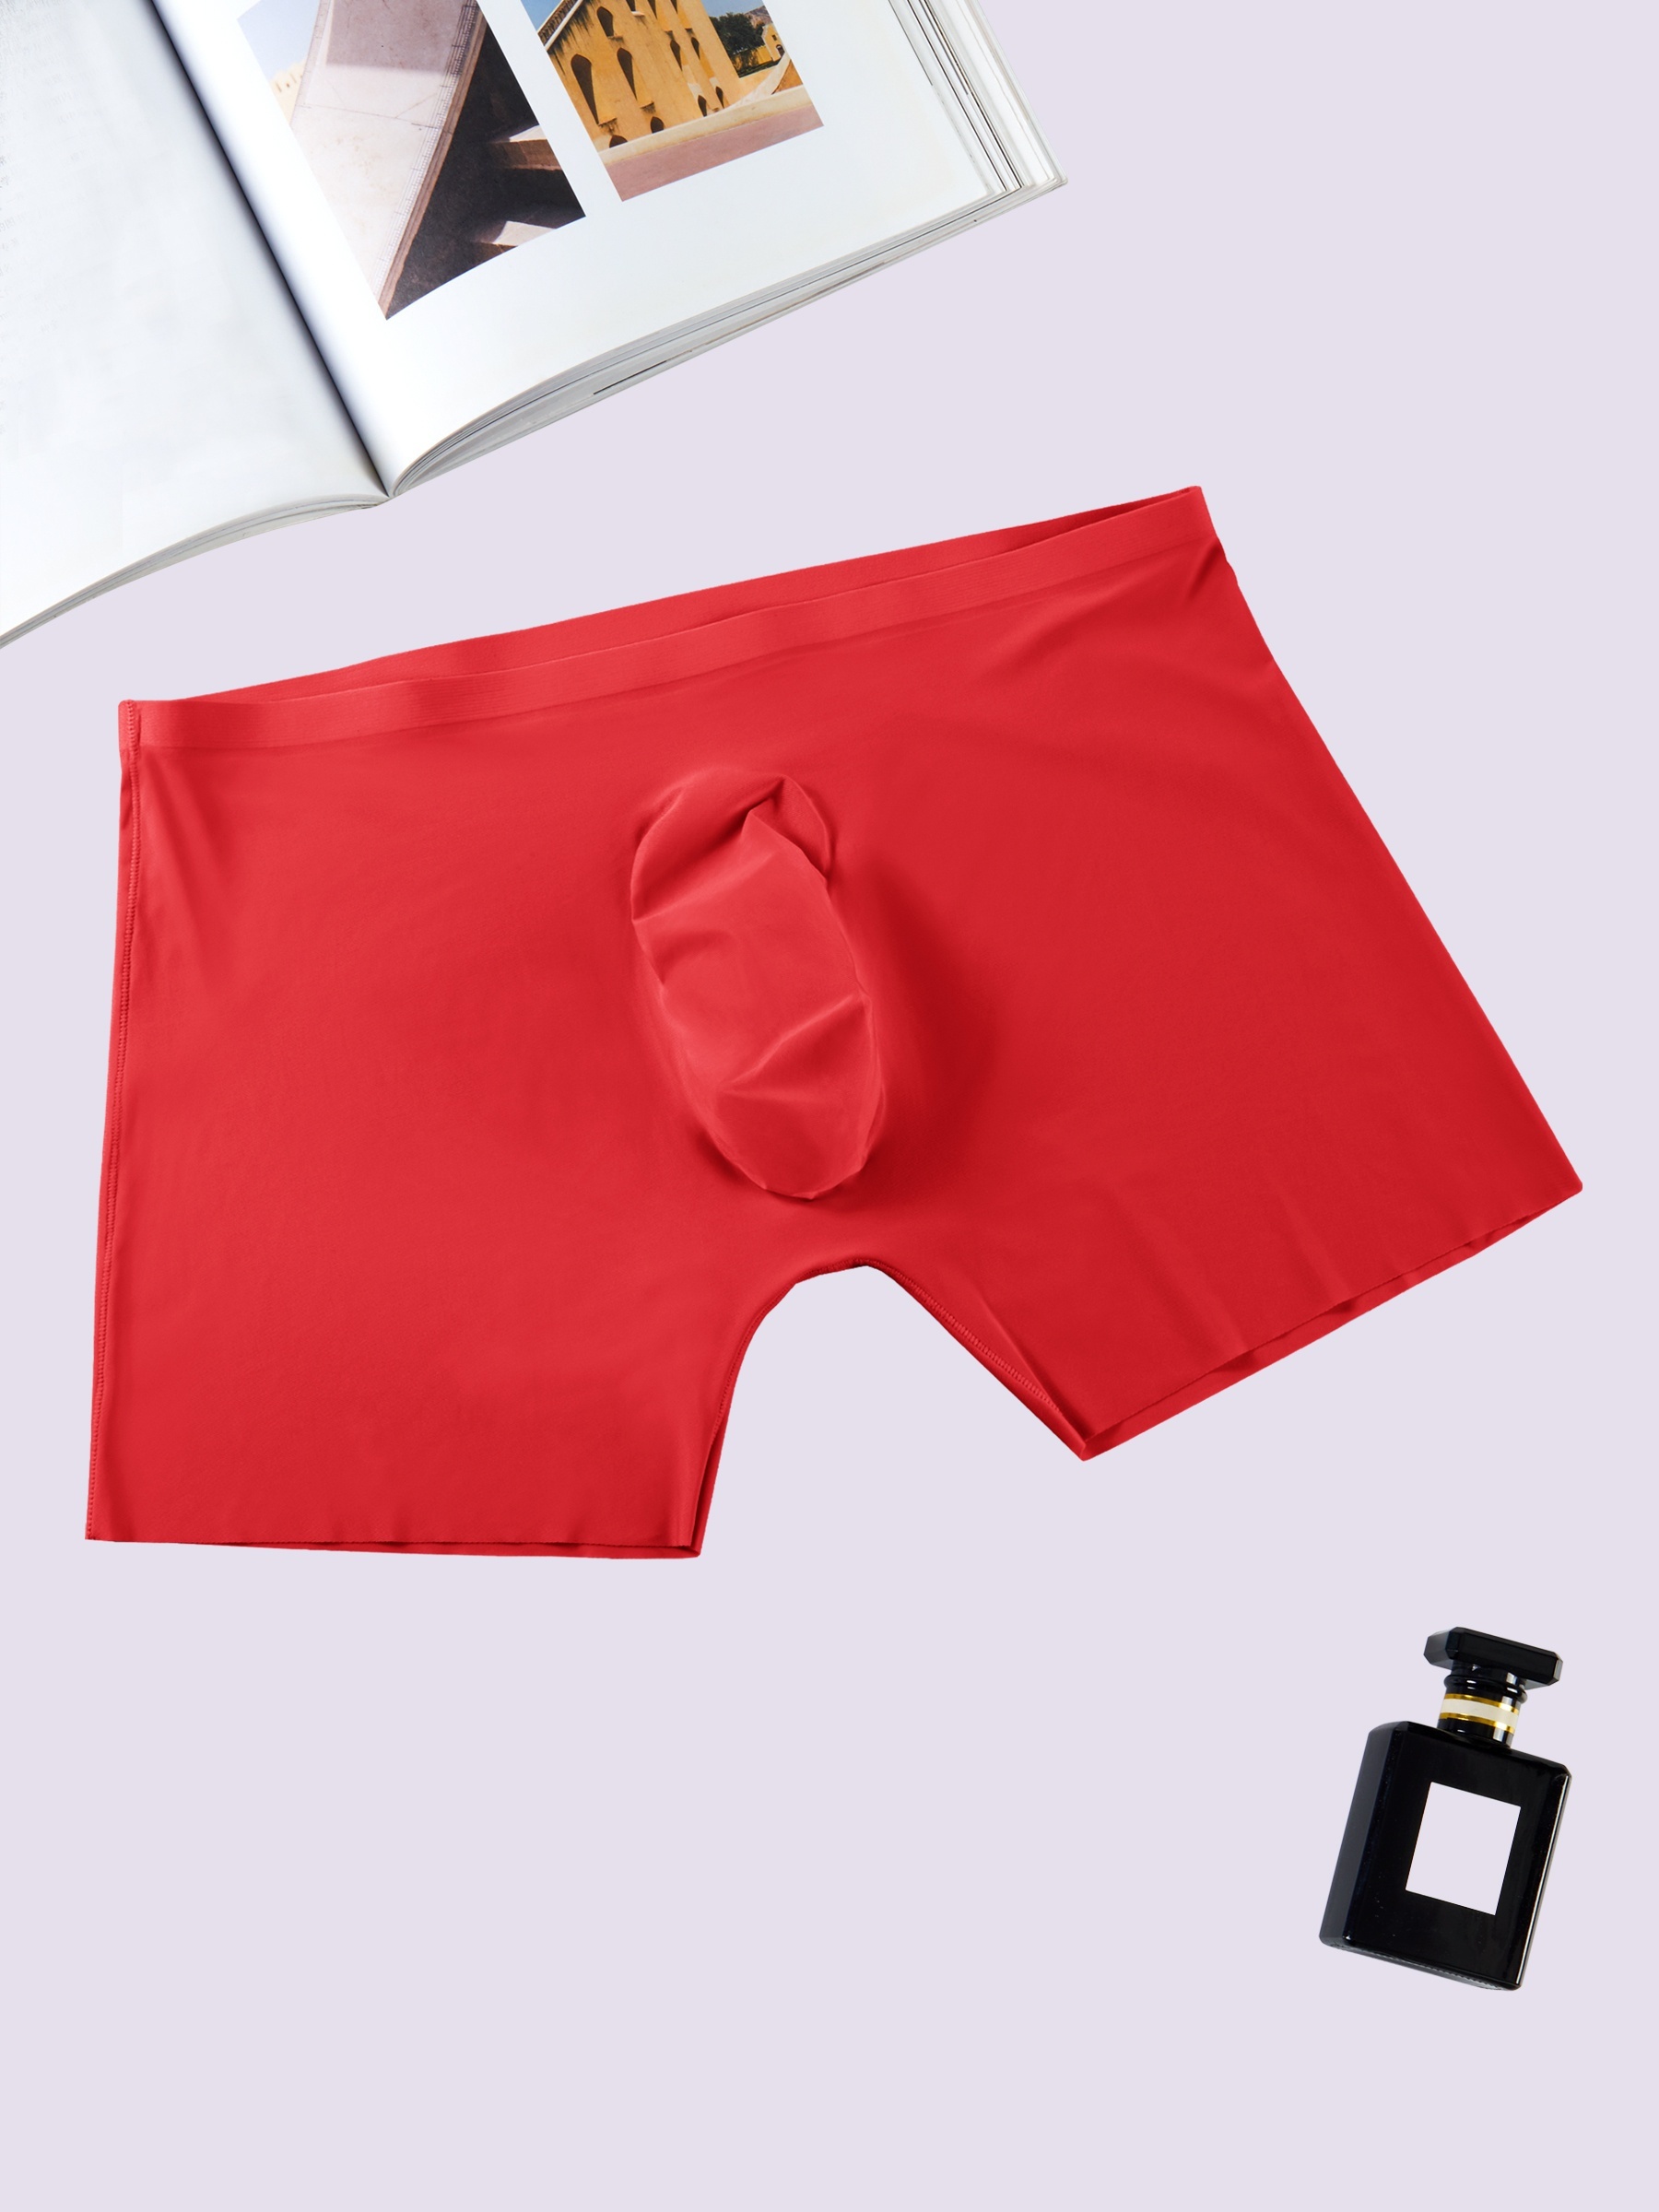 Summer Ice Silk Men Underwear Seamless Transparent Boxer Shorts Ultra Thin  Sheer Breathable Comfortable Panties Underpants